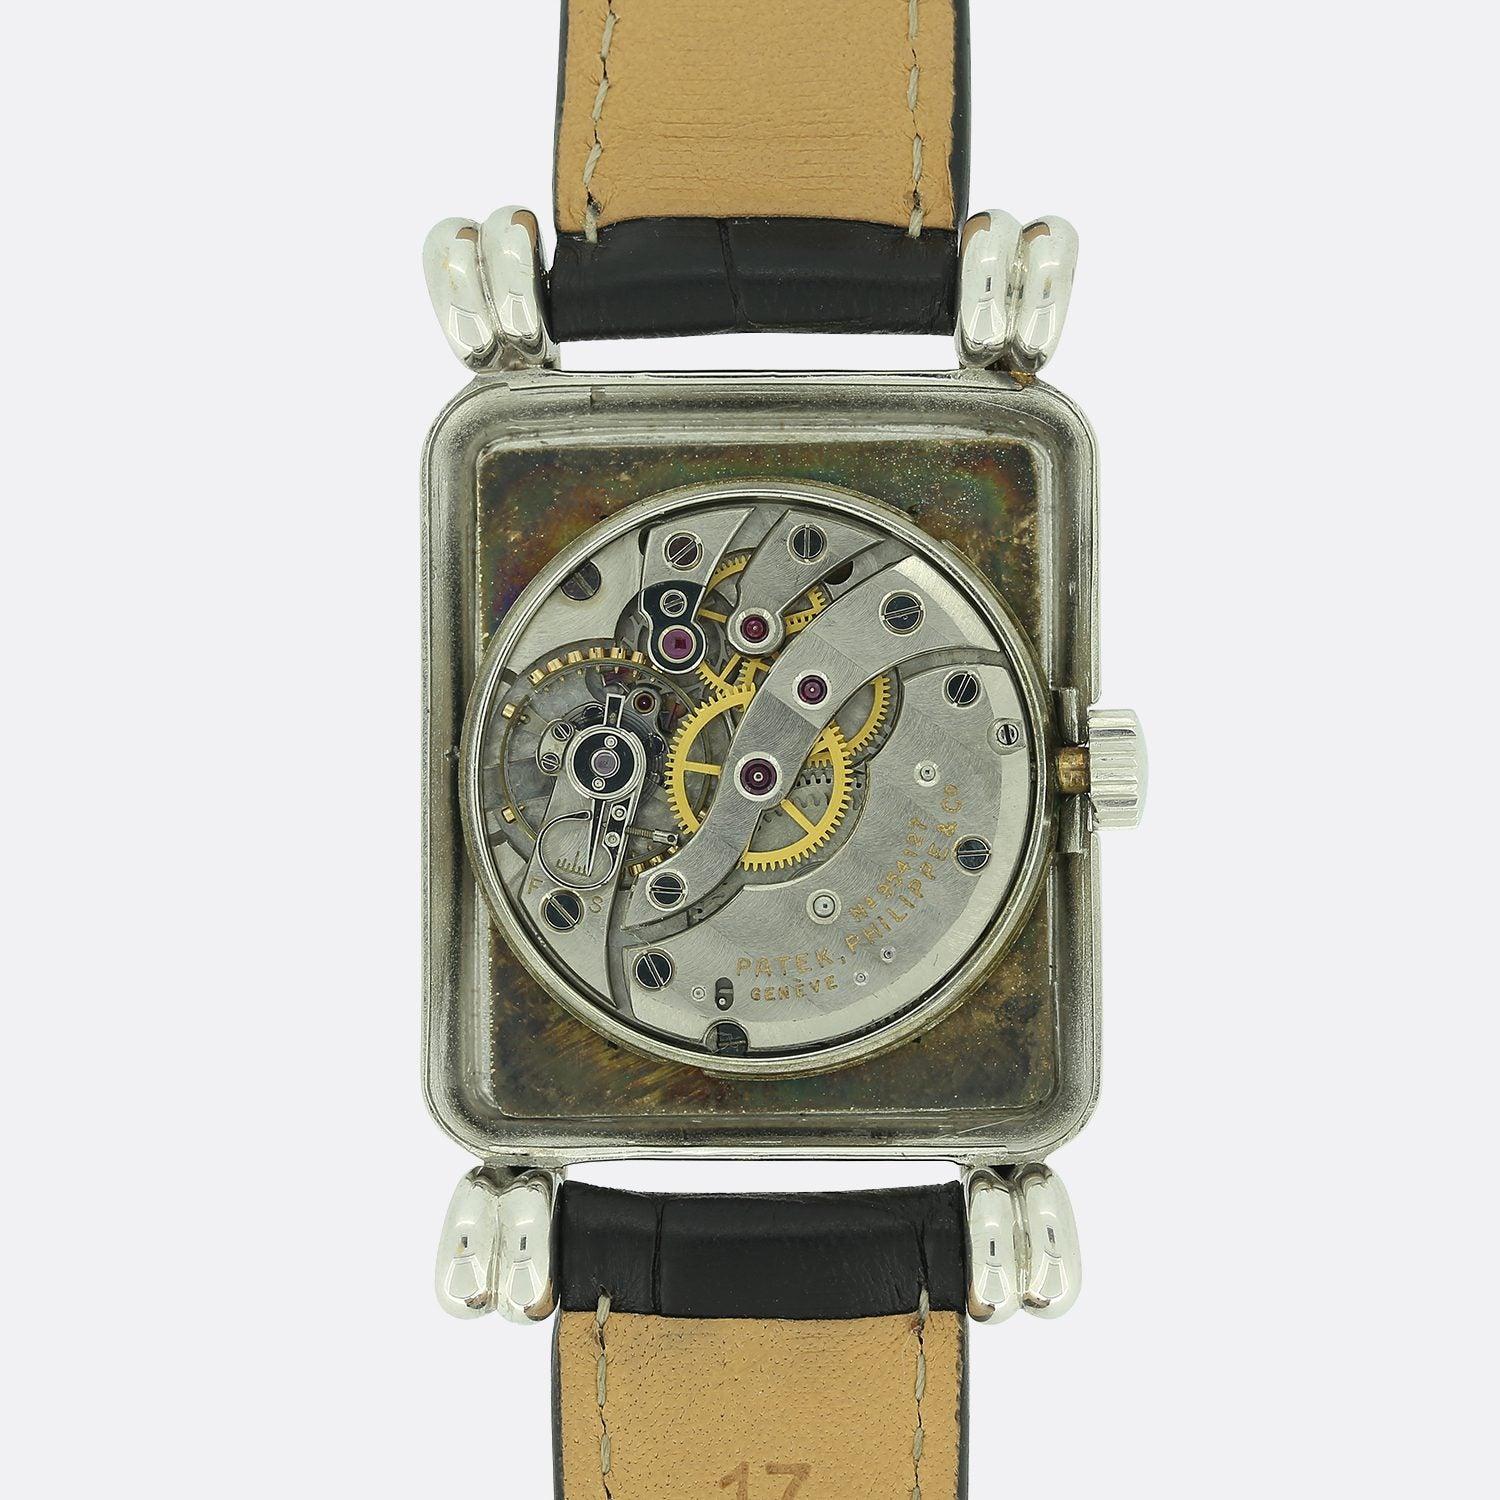 Patek Philippe Herren-Handarmbanduhr Ref 2440, Vintage 1950er Jahre 1